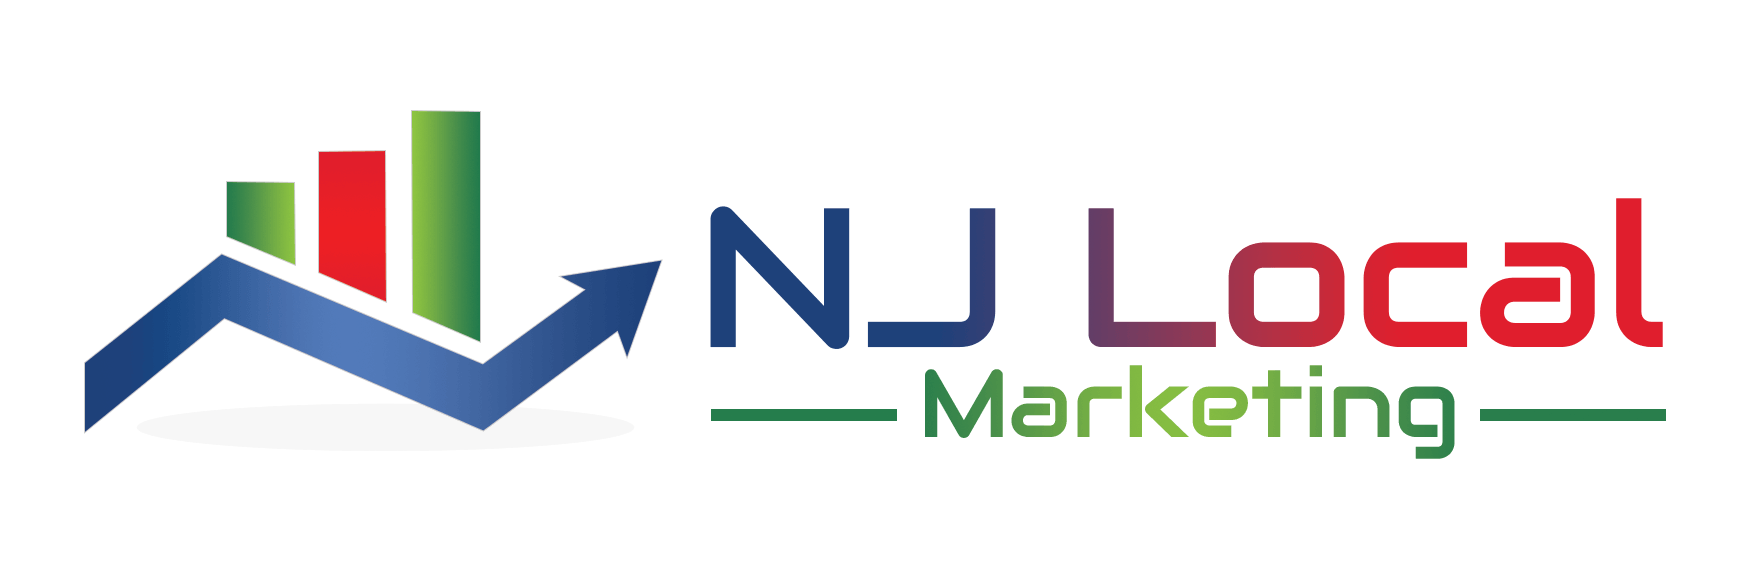 Newark SEO Digital Marketing Agency For Local Google Ranking: Service Update